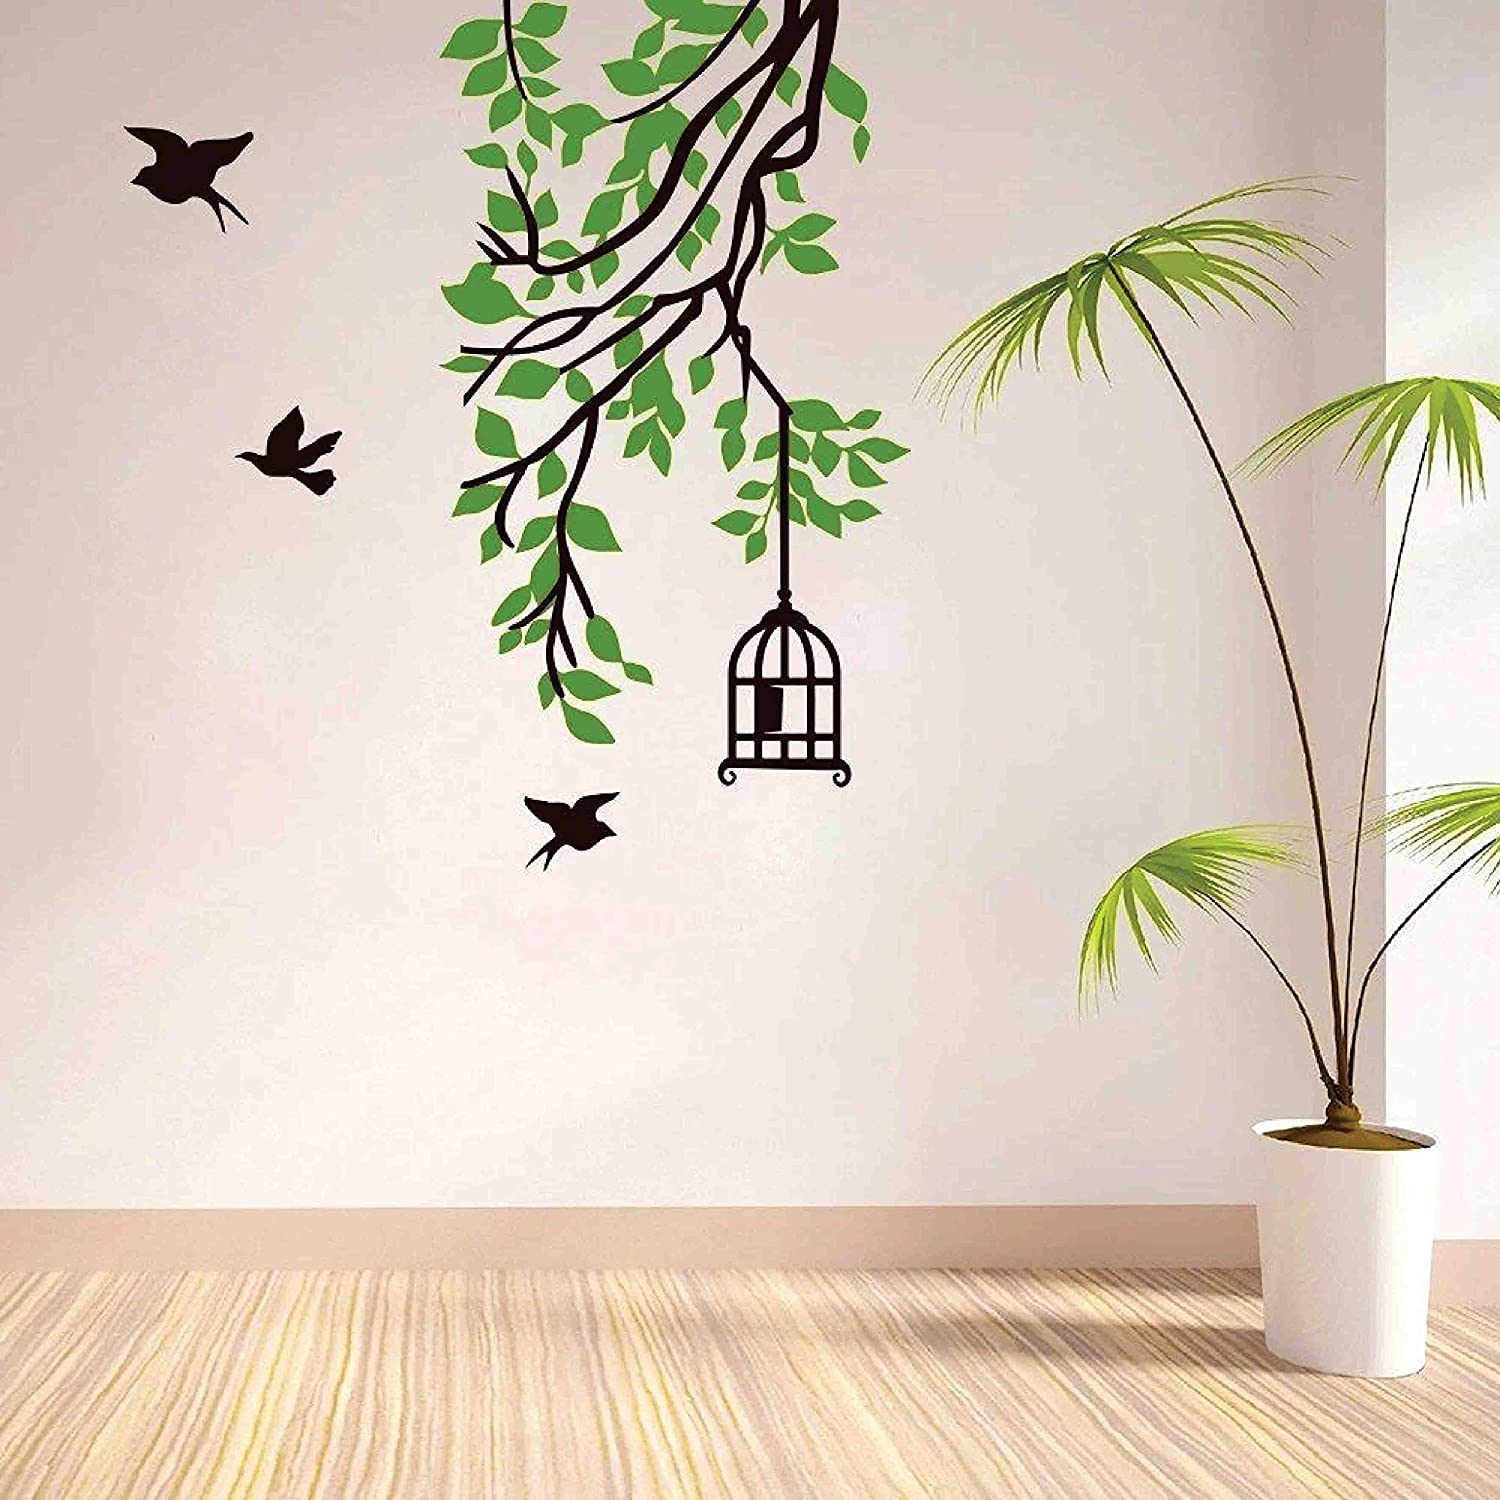 Buy Trends on Wall Black-Green Bird Tree Home Design Wall Sticker